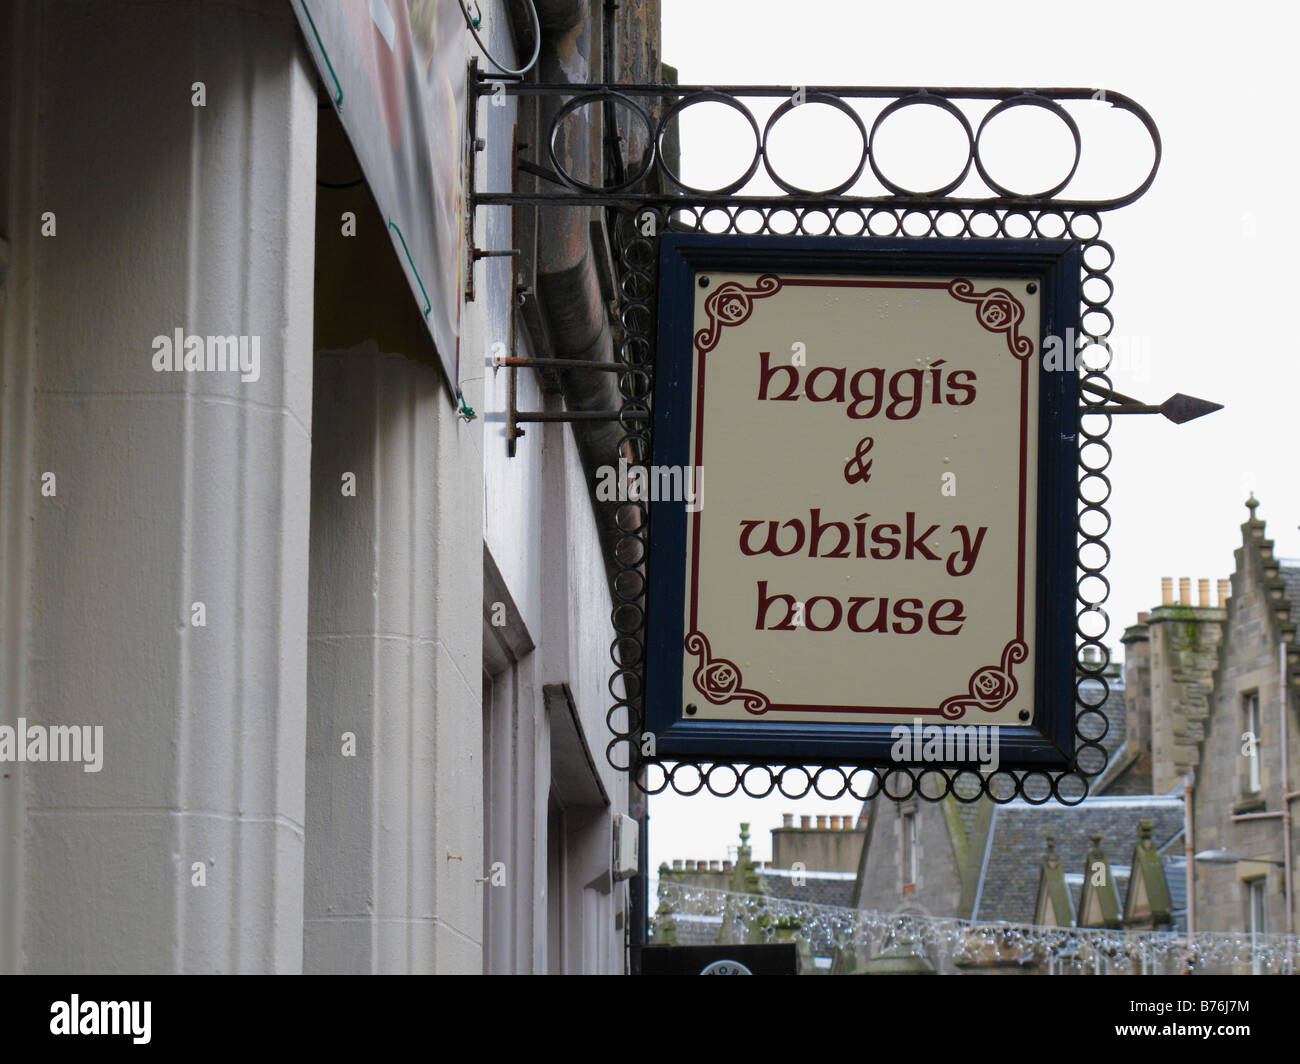 Haggis and Whisky House pub sign in old Edinburgh Scotland Stock Photo